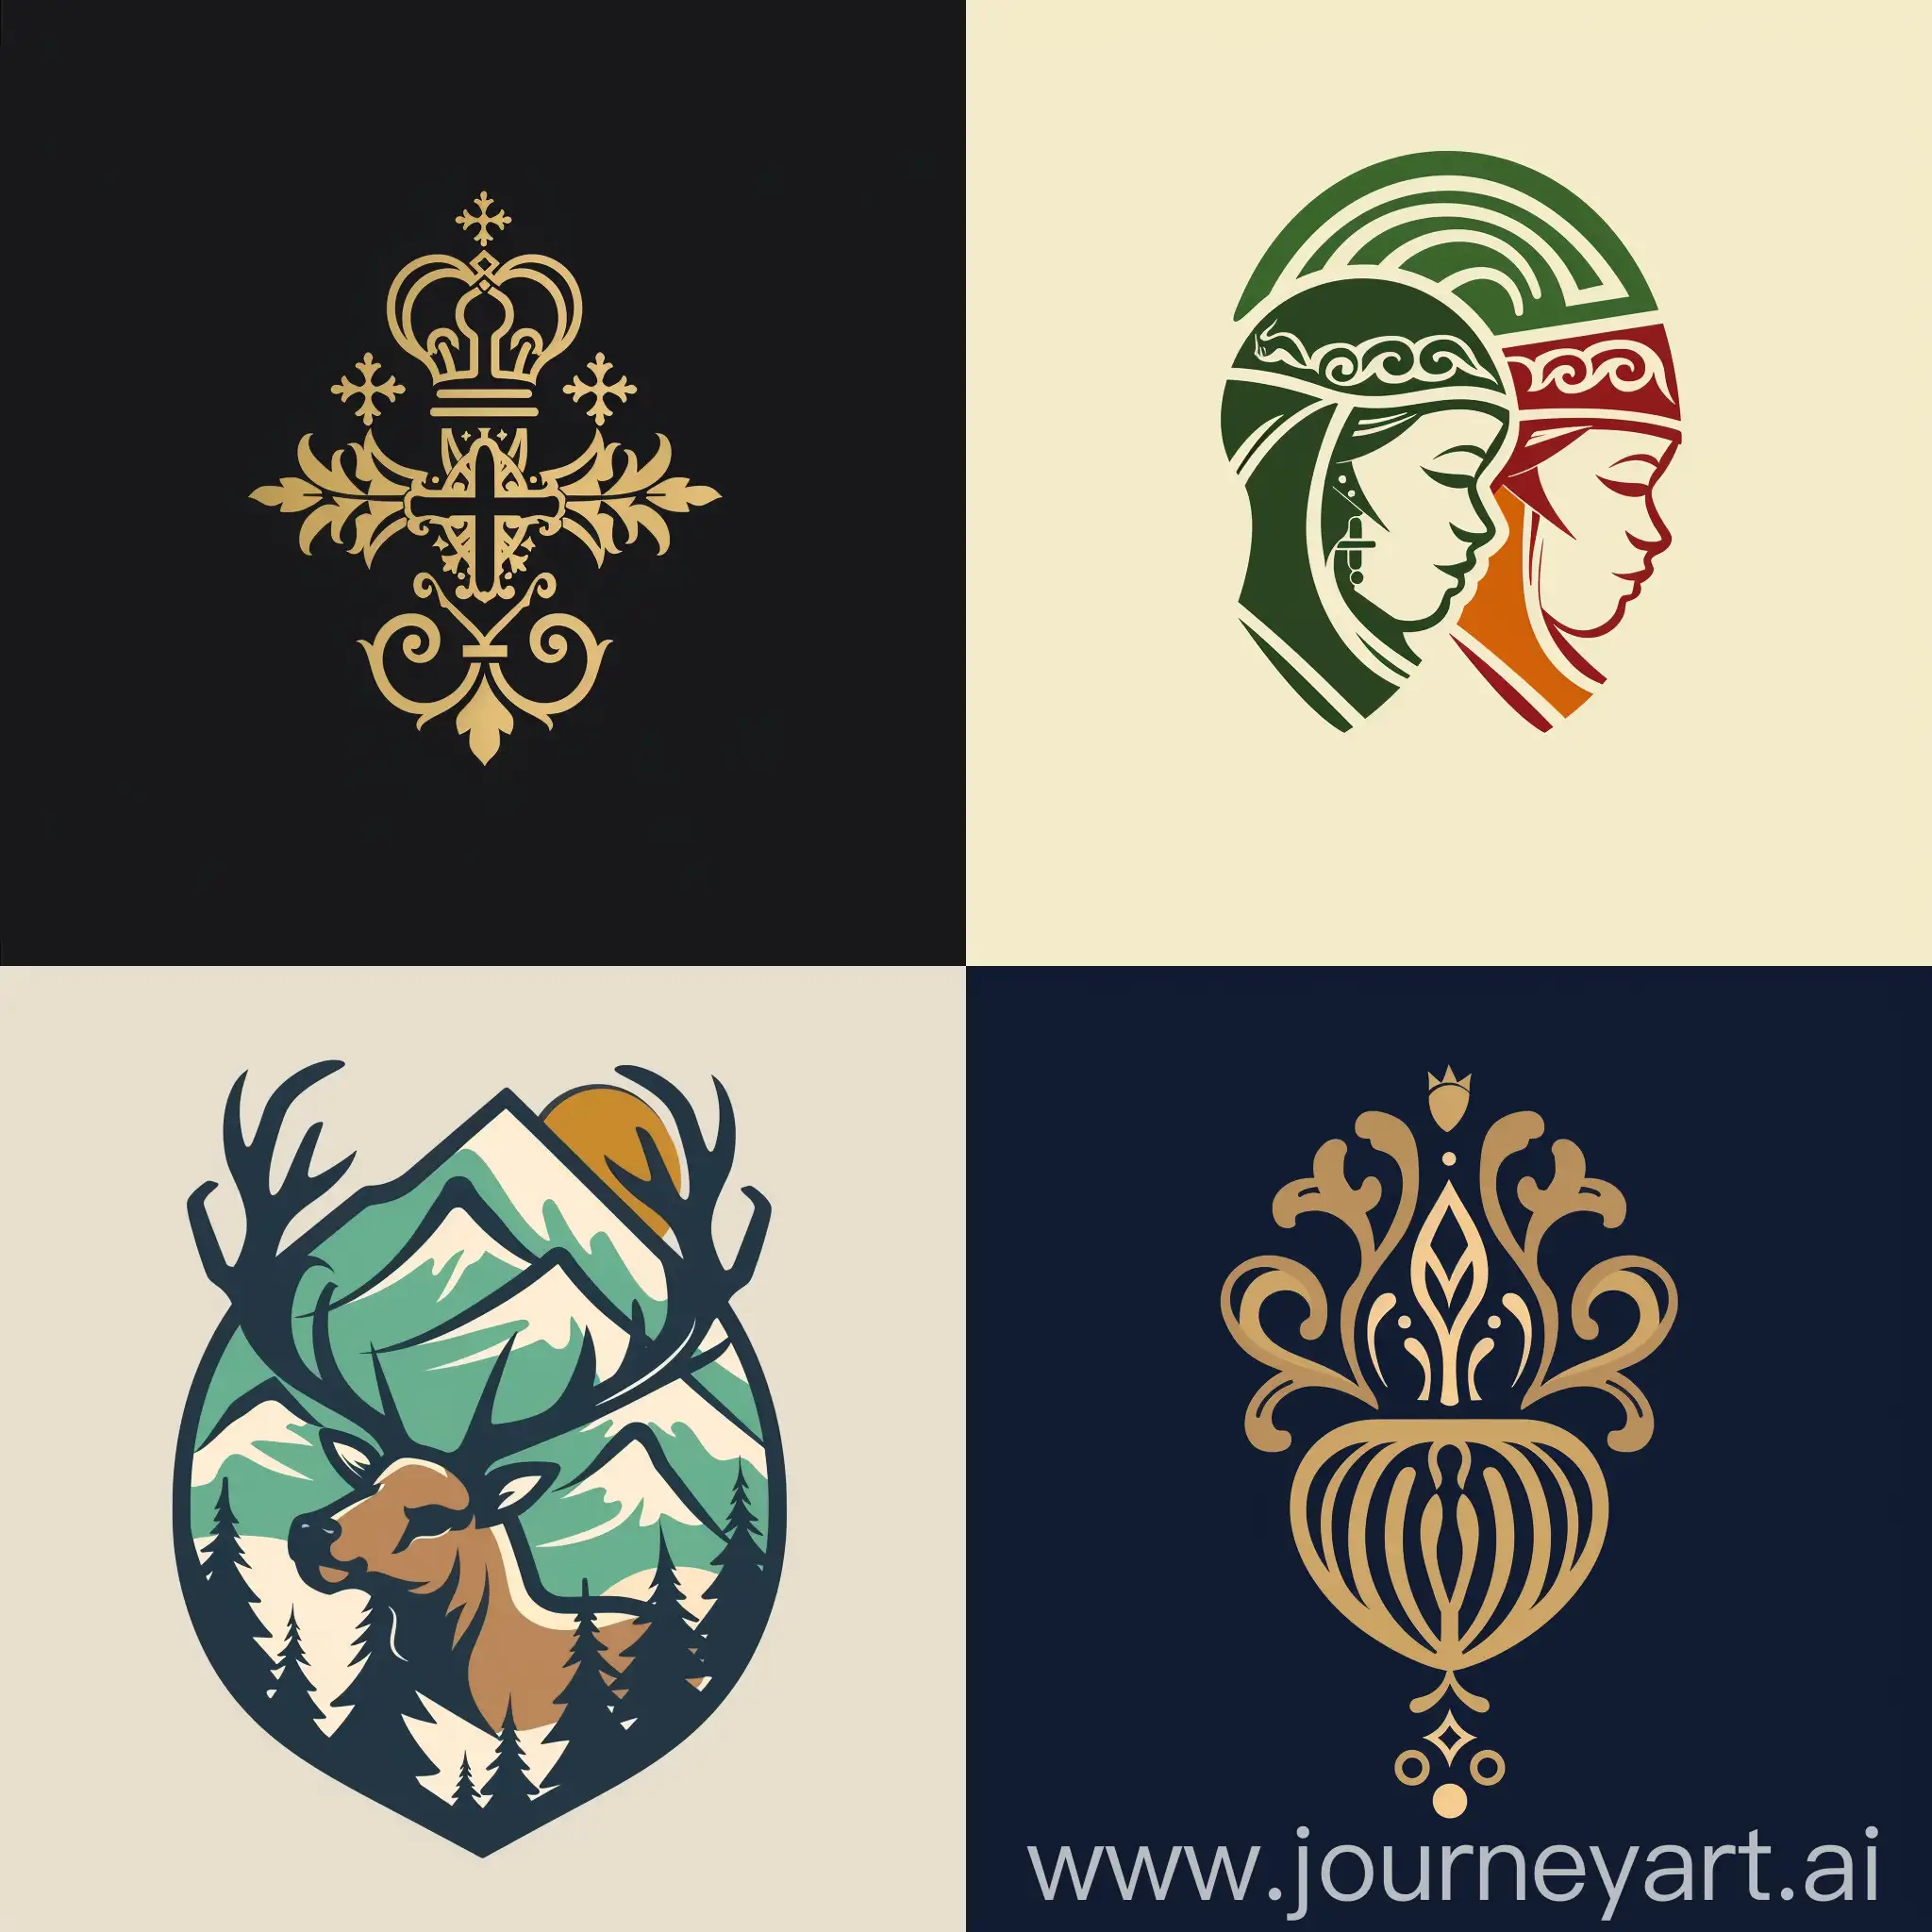 Karelian-Tour-Company-Logo-Vibrant-Emblem-Reflecting-Local-Culture